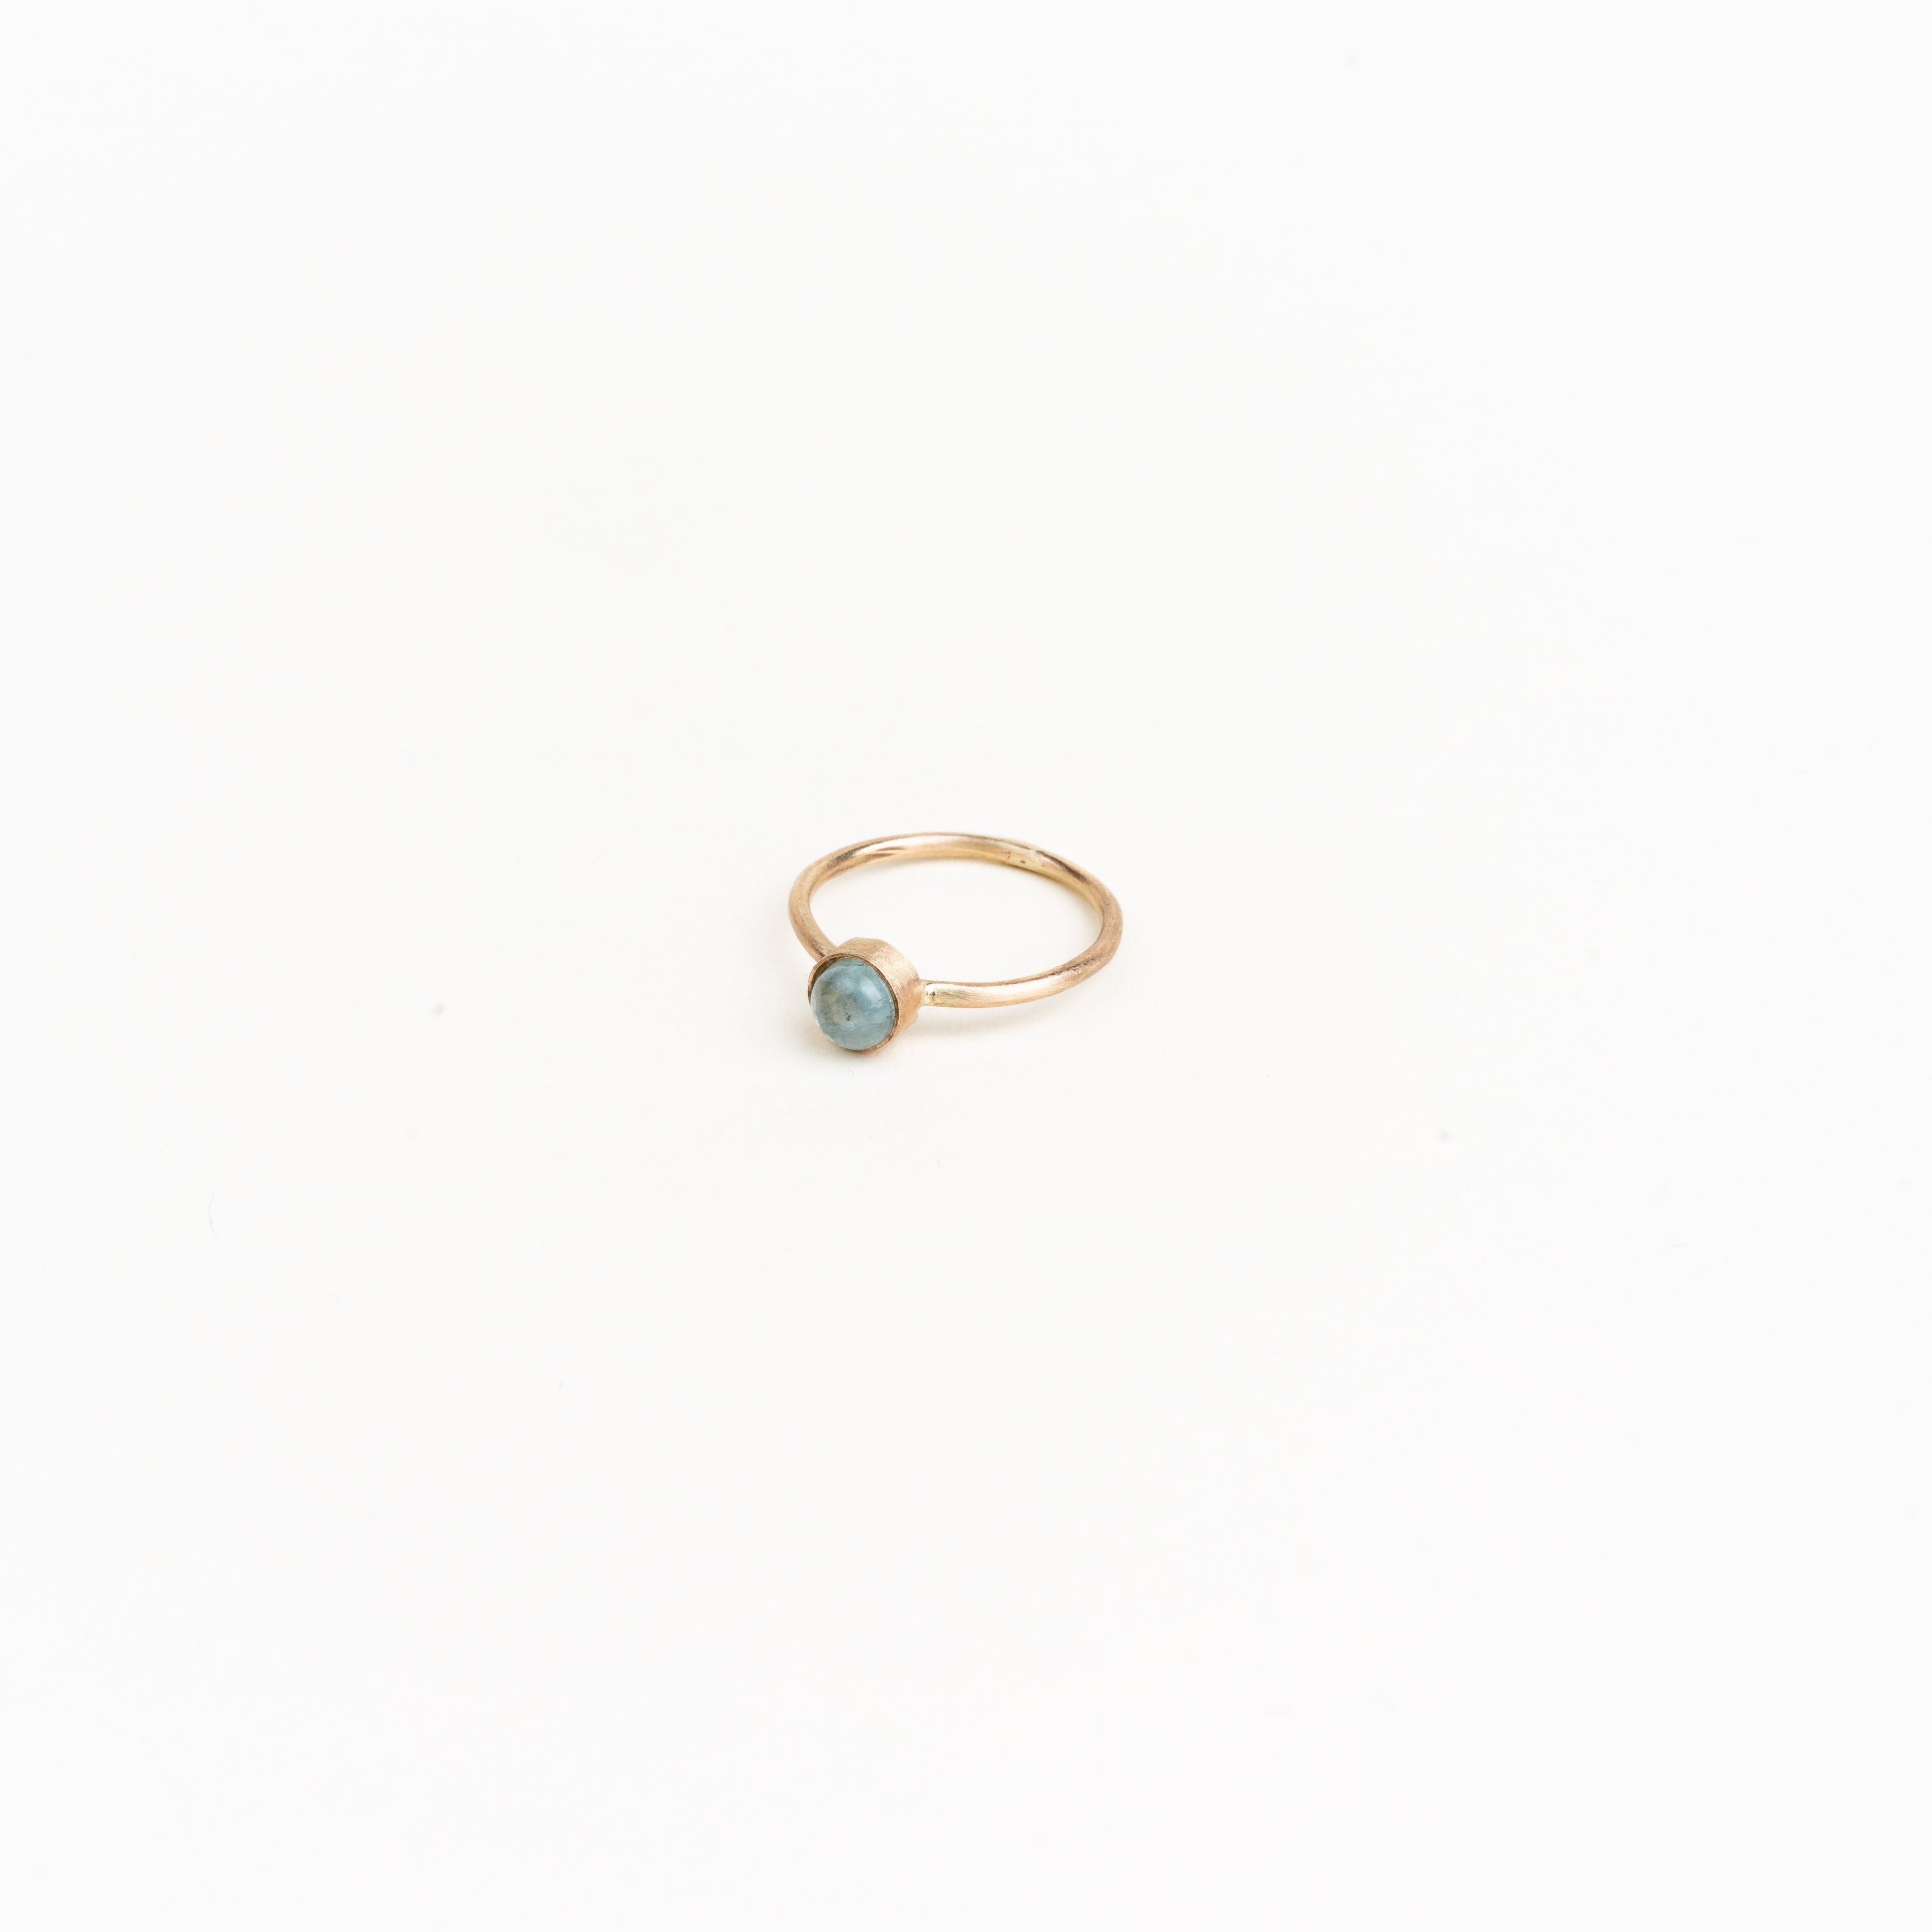 10k gold Aquamarine Ring